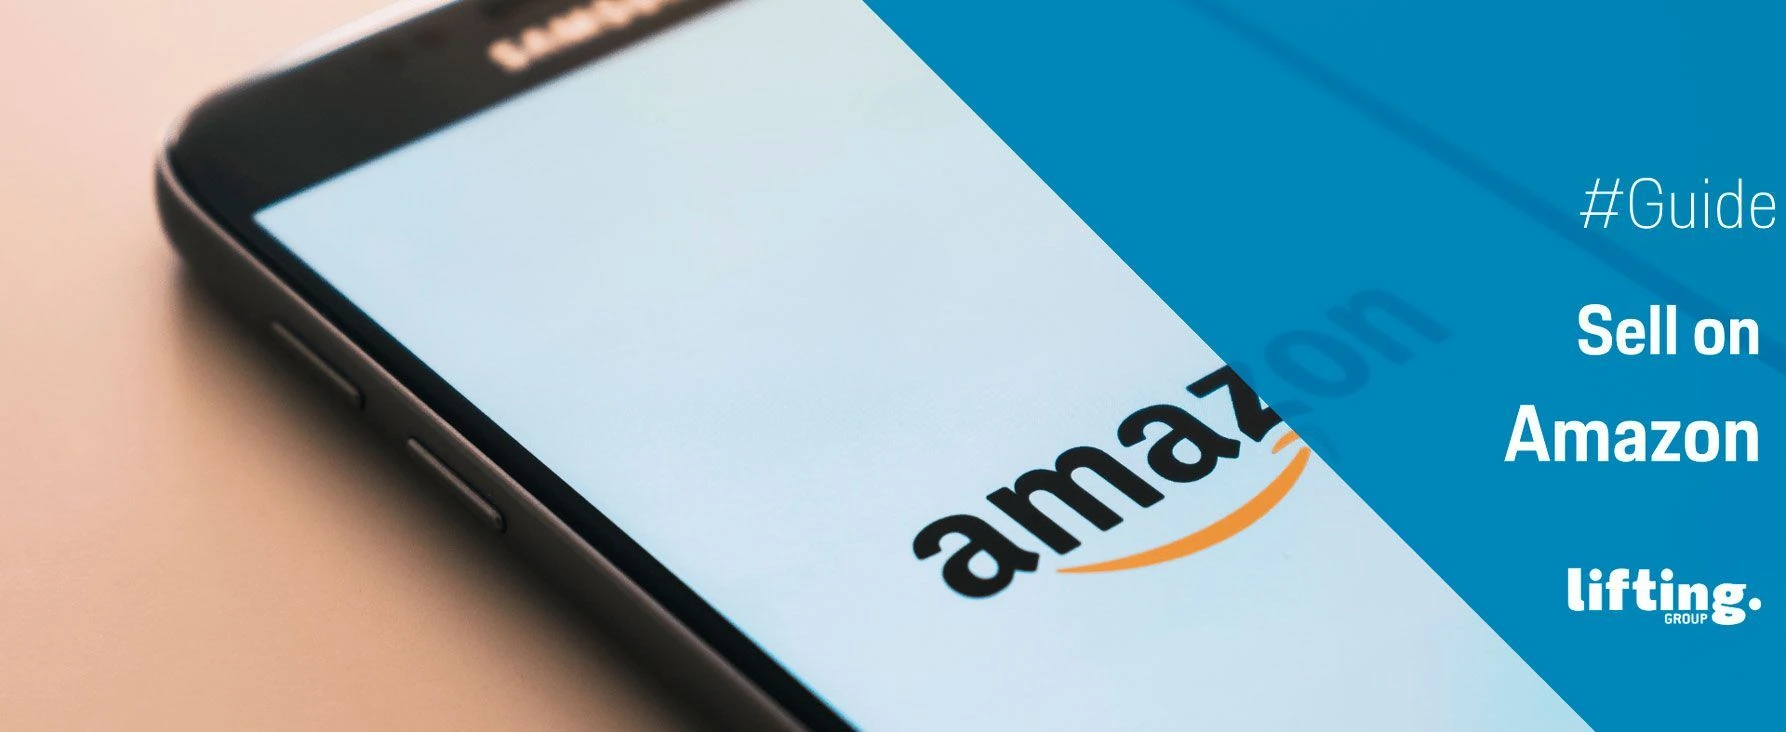 Amazon 2: How do I start selling on Amazon?